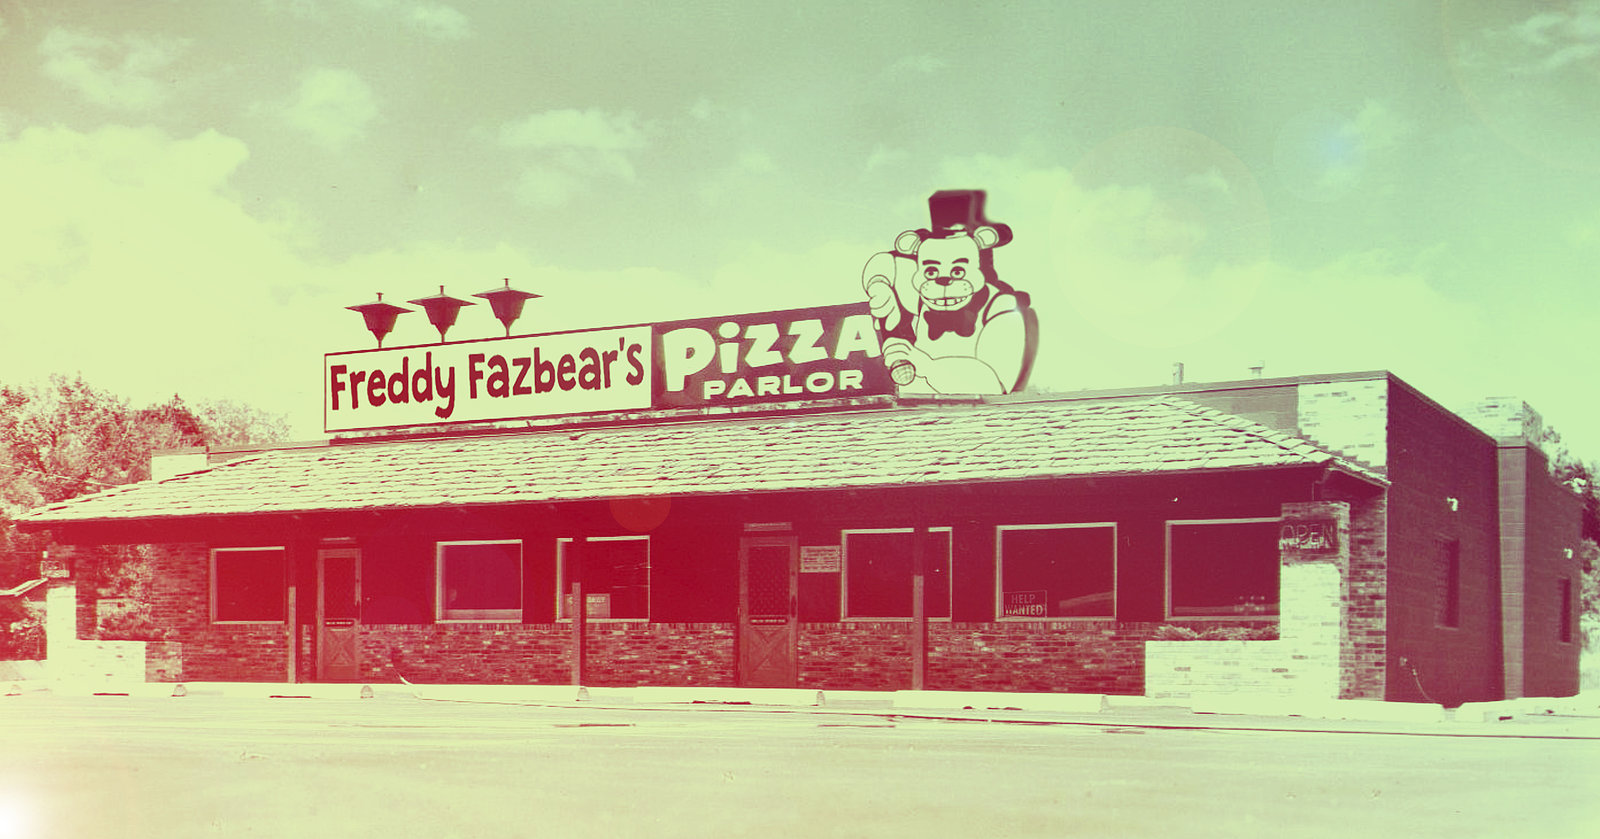 Freddy fazbear's pizza существует